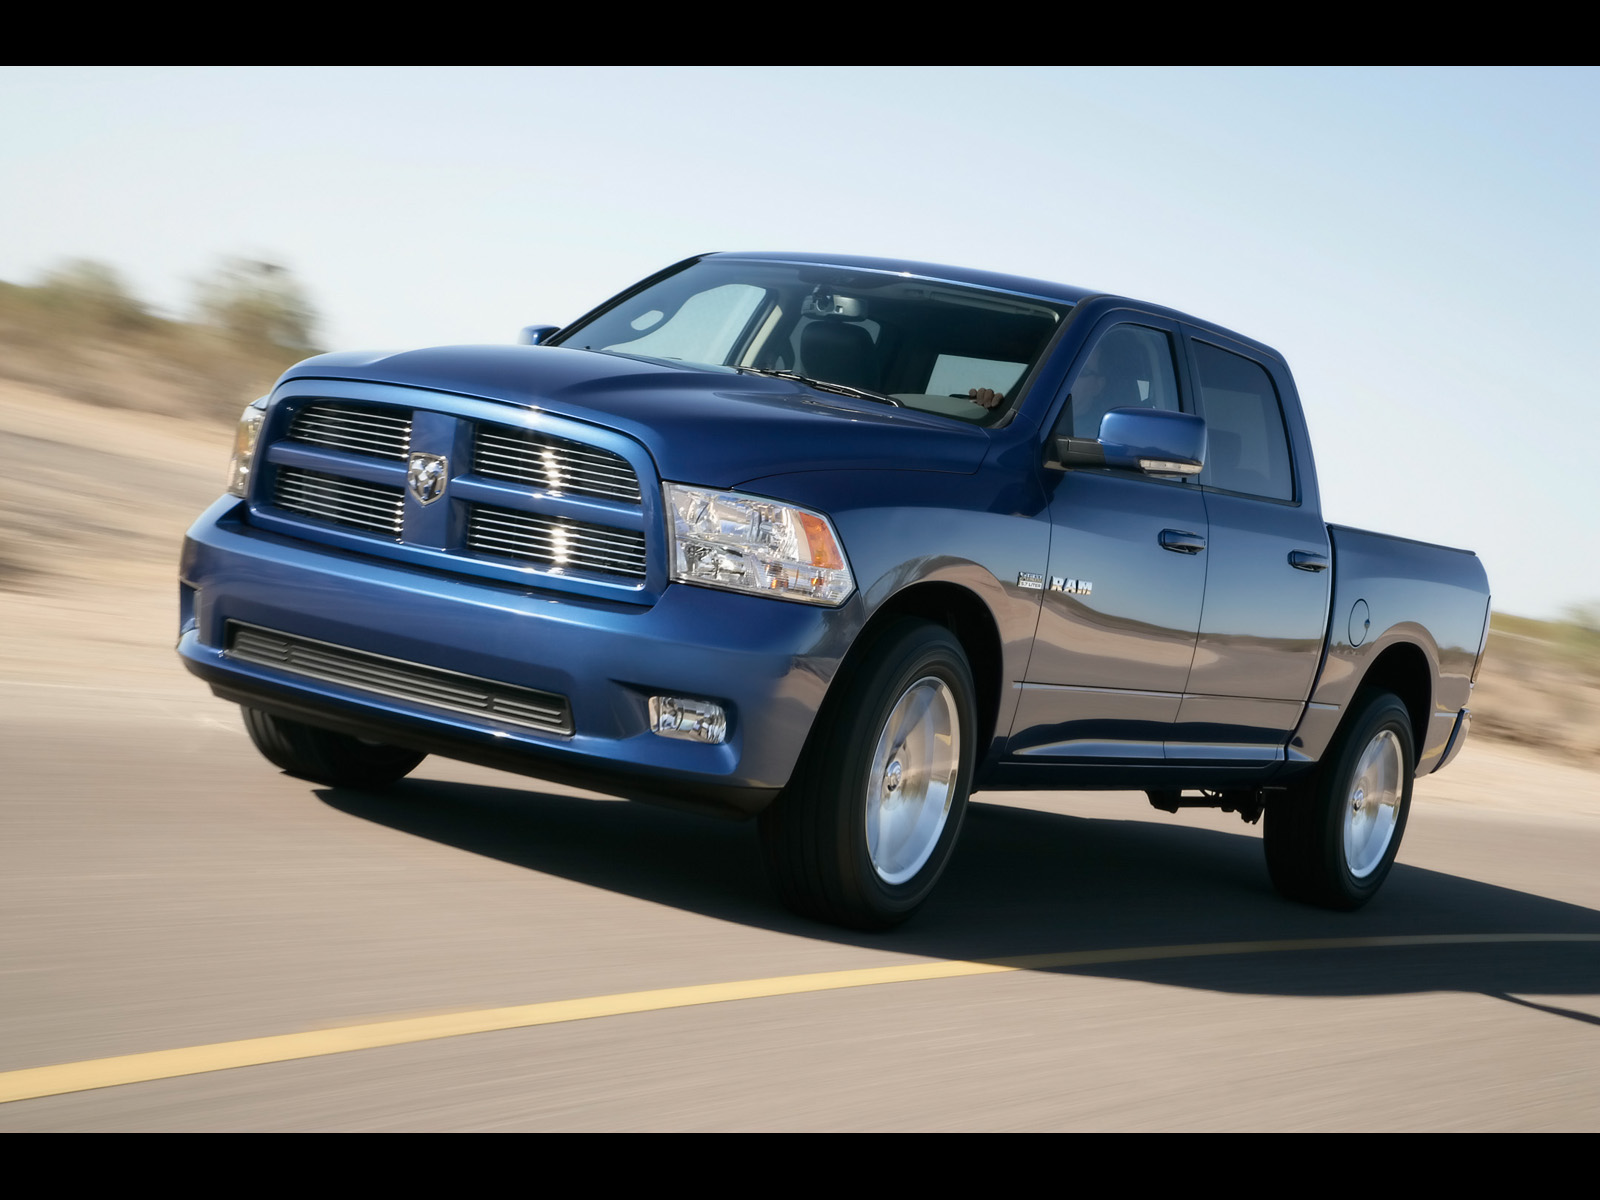 2009, Dodge, Ram, Pickup, Truck, Hf Wallpaper